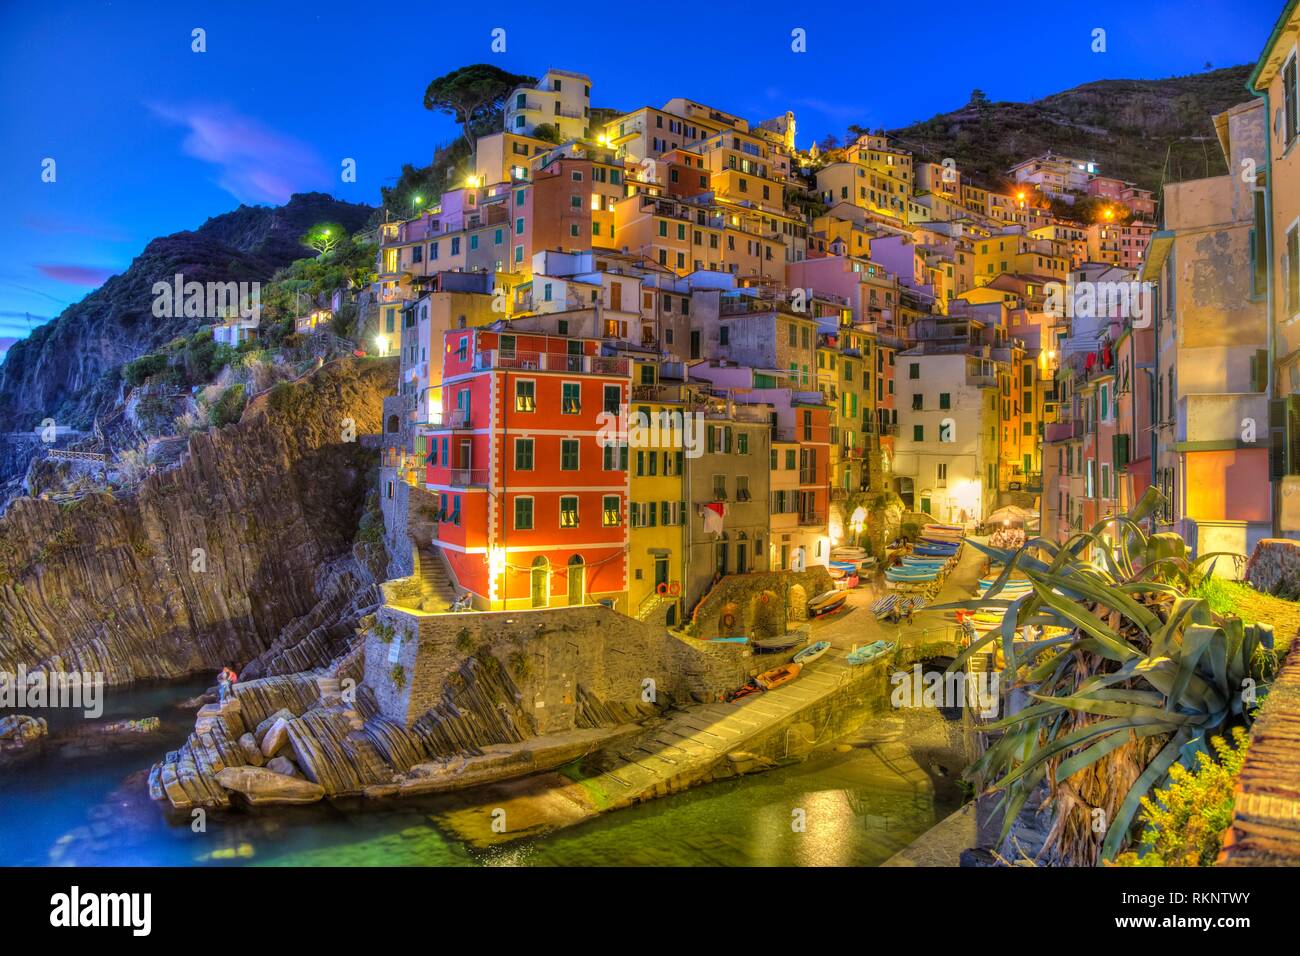 The cliffside village of Riomaggiore illuminated at dusk in Cinque Terre, Italy, Europe. Stock Photo